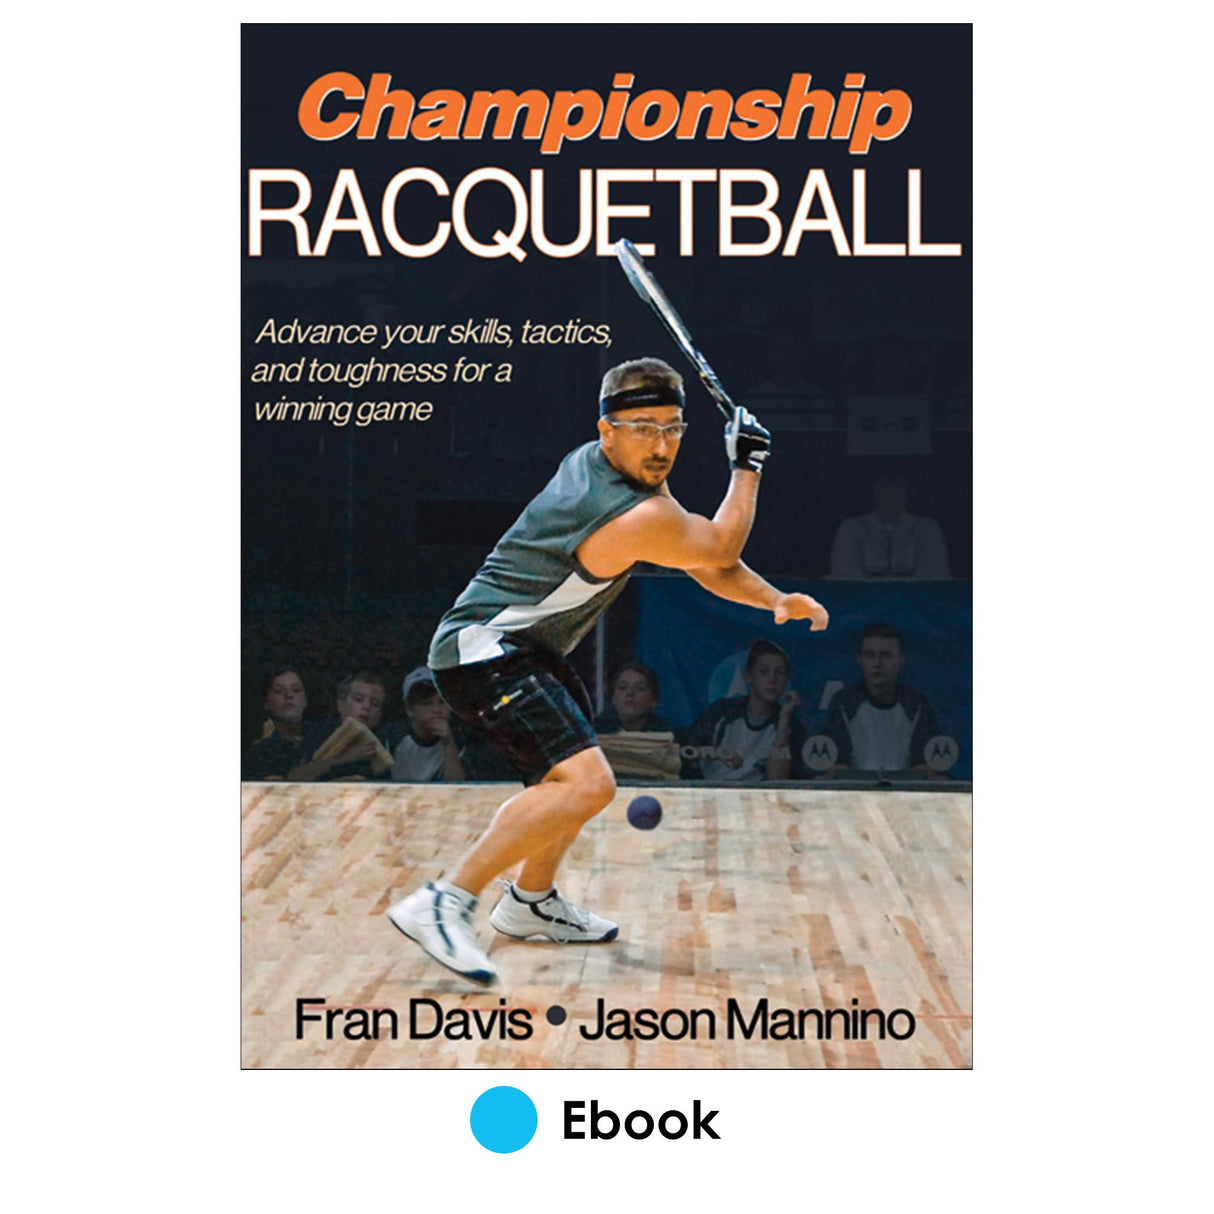 Championship Racquetball PDF